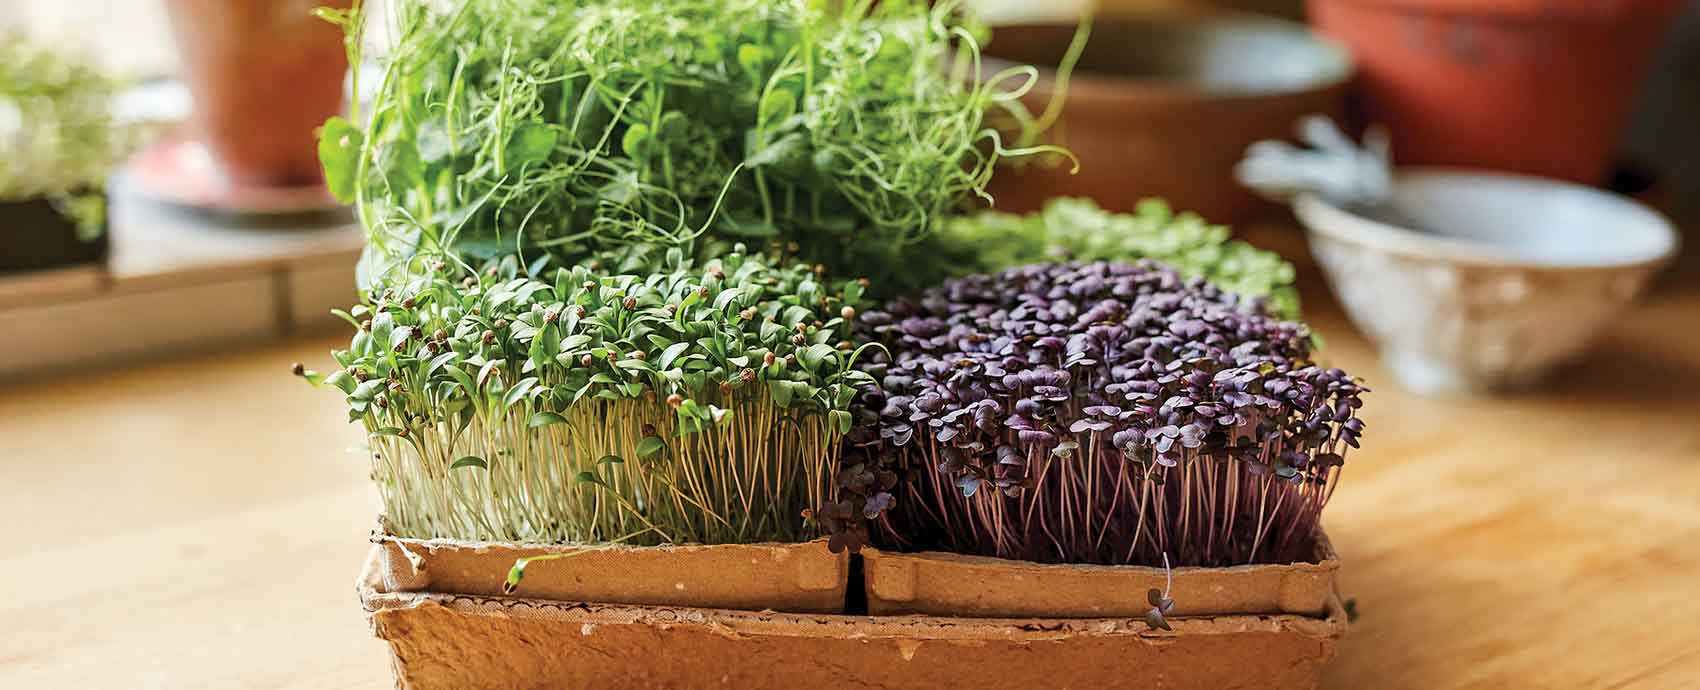 edible greens on kitchen countertop